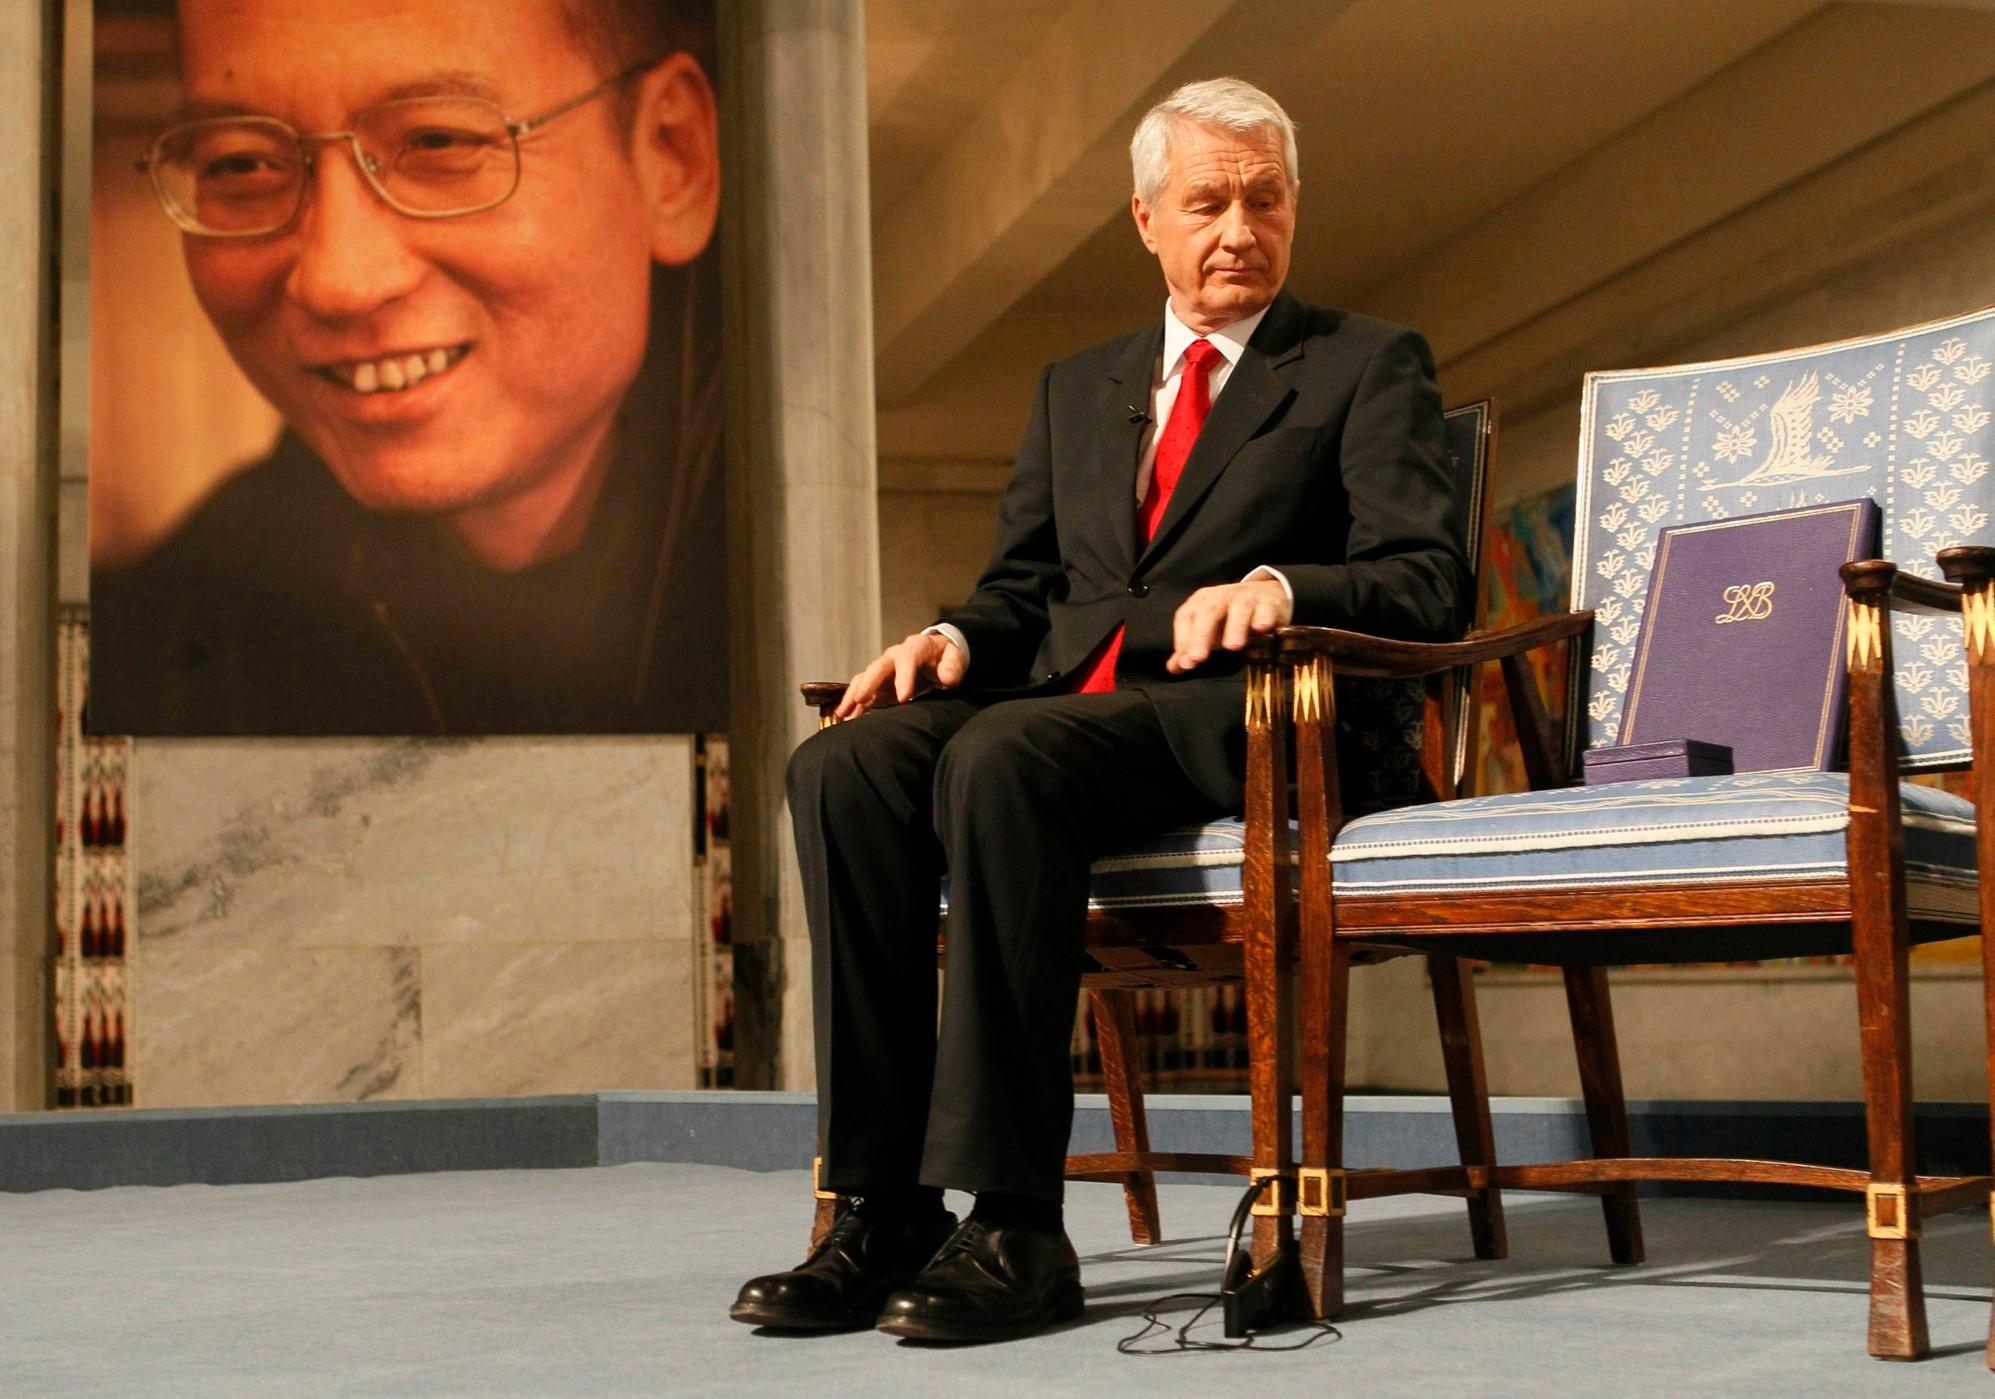 Daværende leder for Nobelkomiteen, Thorbjørn Jagland, med den tomme stolen og Liu Xiaobos portrett under seremonien i Oslo rådhus 10. desember 2010. 